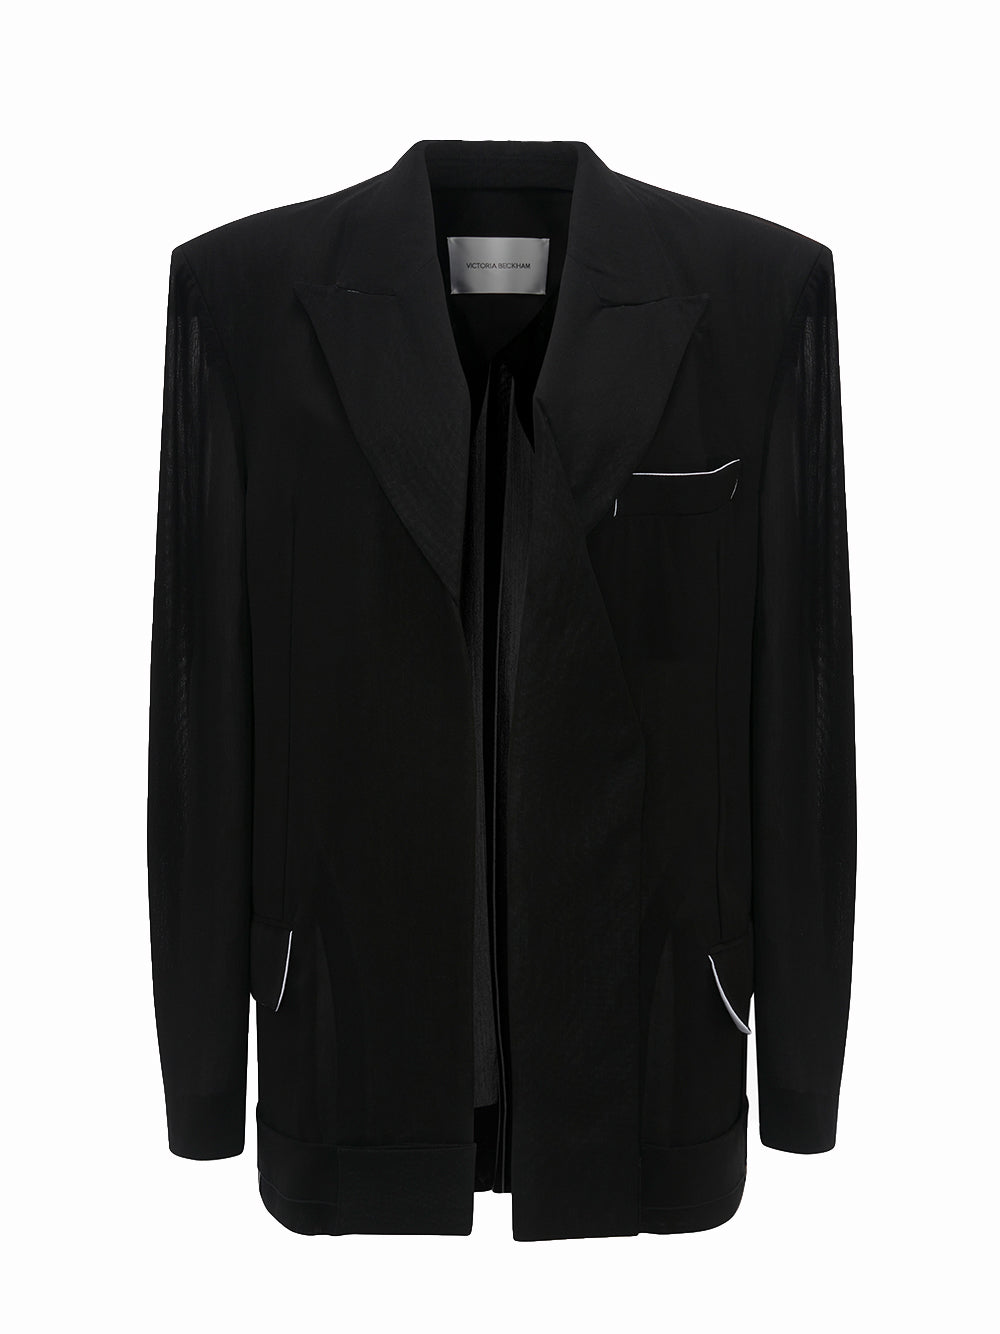 Fold Detail Tailored Jacket (Black)